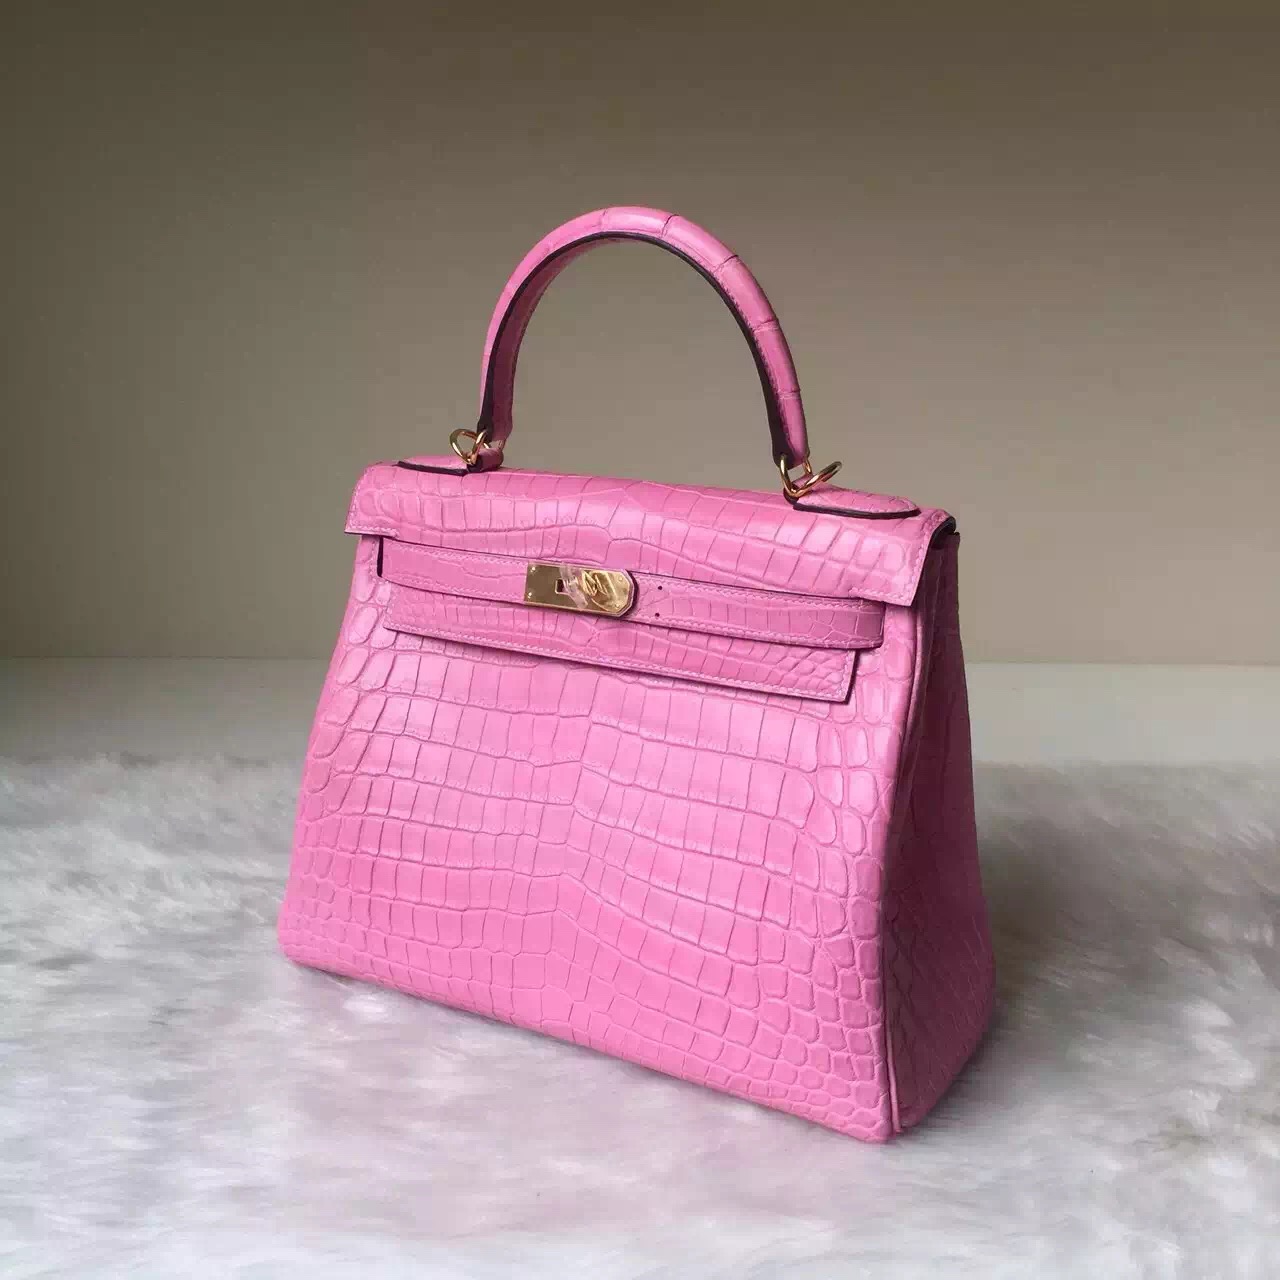 Hermes Crocodile Matt Leather Kelly Bag 28cm in 5P Sakura Pink